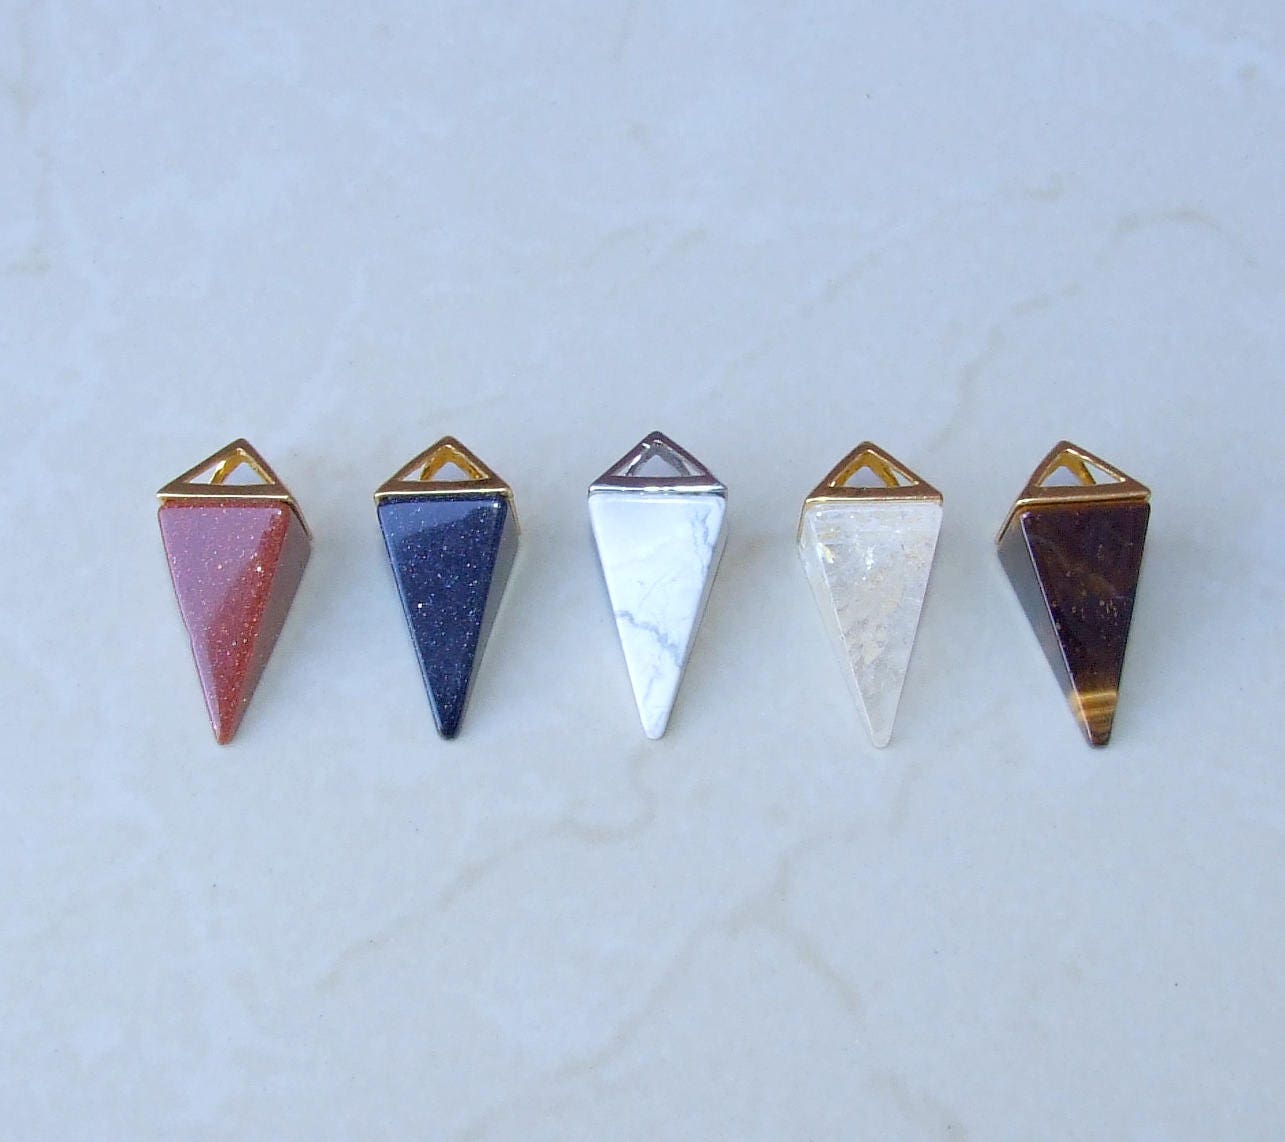 Amethyst Pendant - Pyramid Quartz Pendant - Triangle Pendant - Quartz Point - Gemstone Pyramid Pendant - 15mm x 34mm